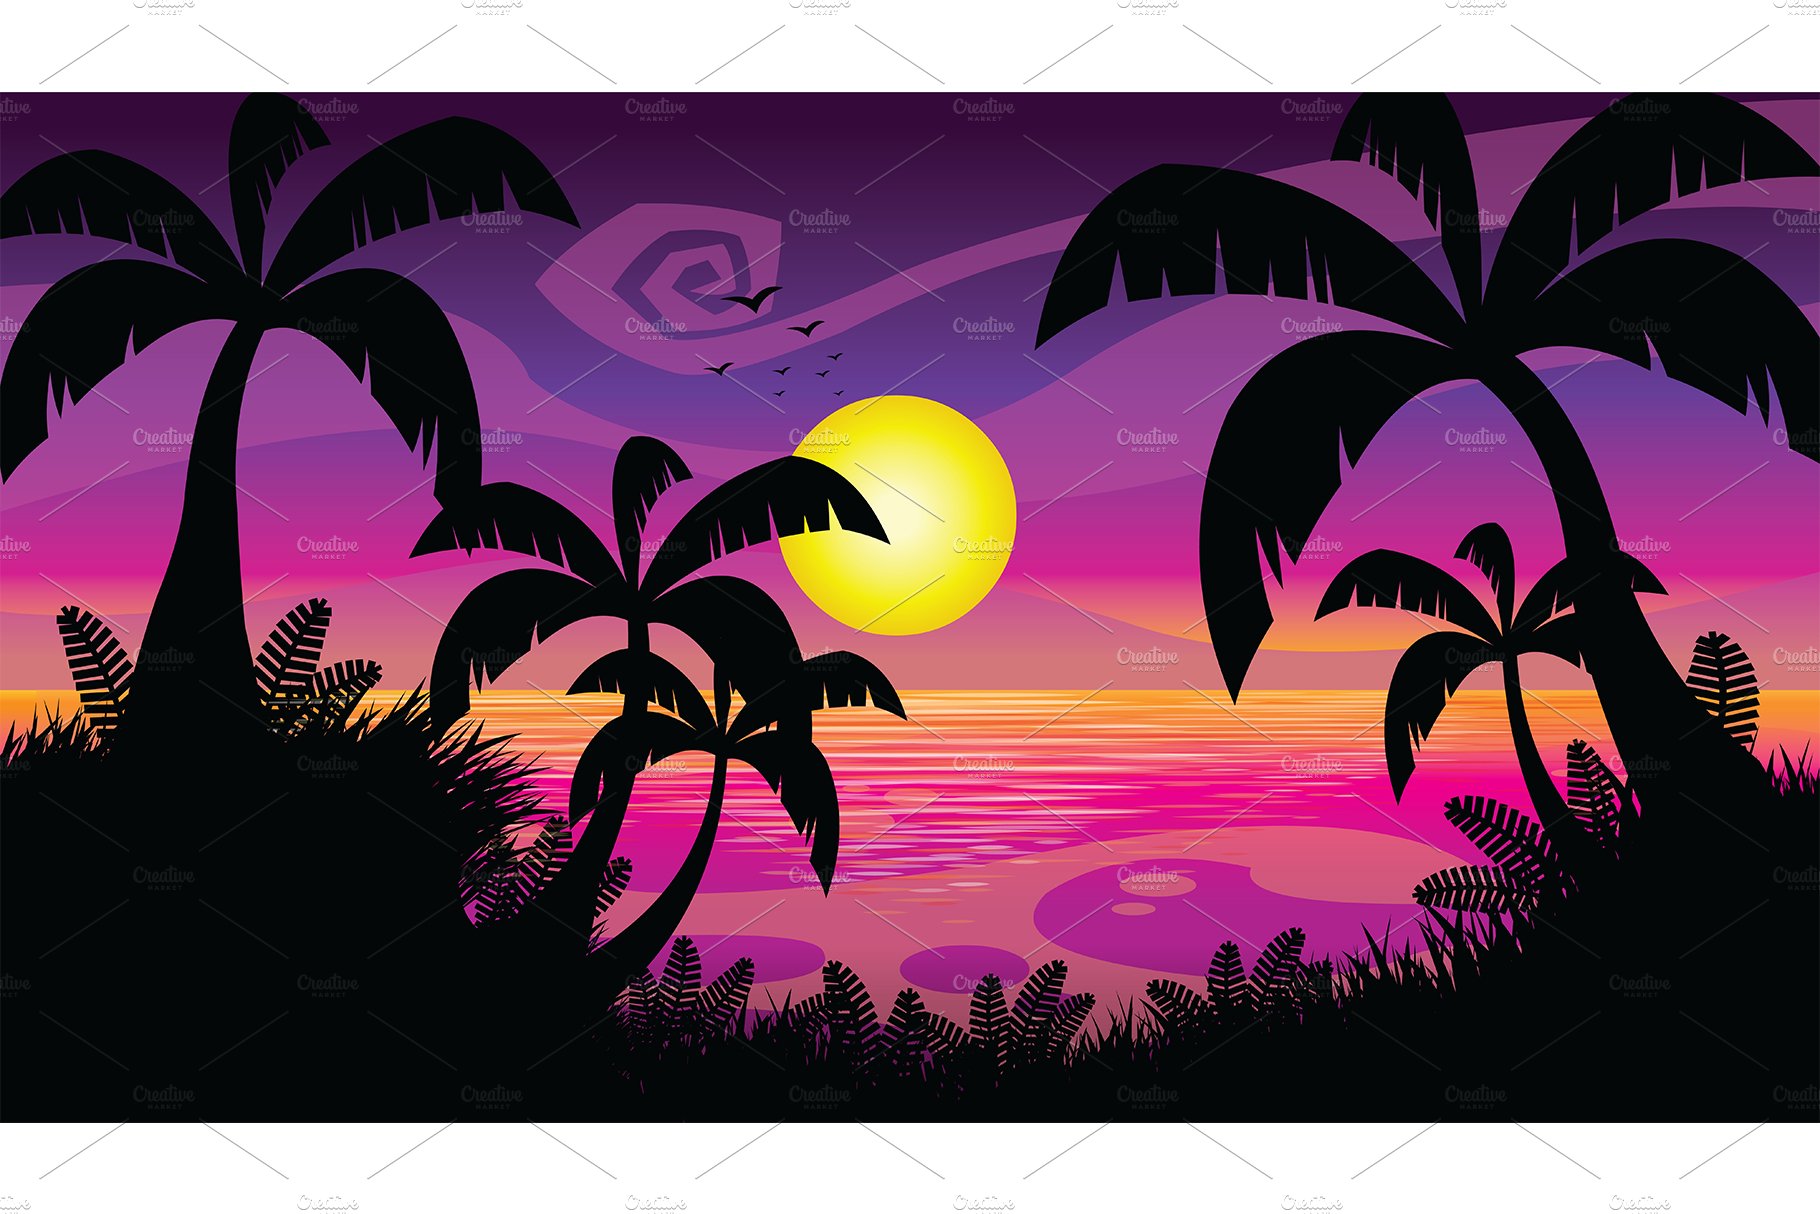 Purple Sunset Cartoon Flat Design cover image.